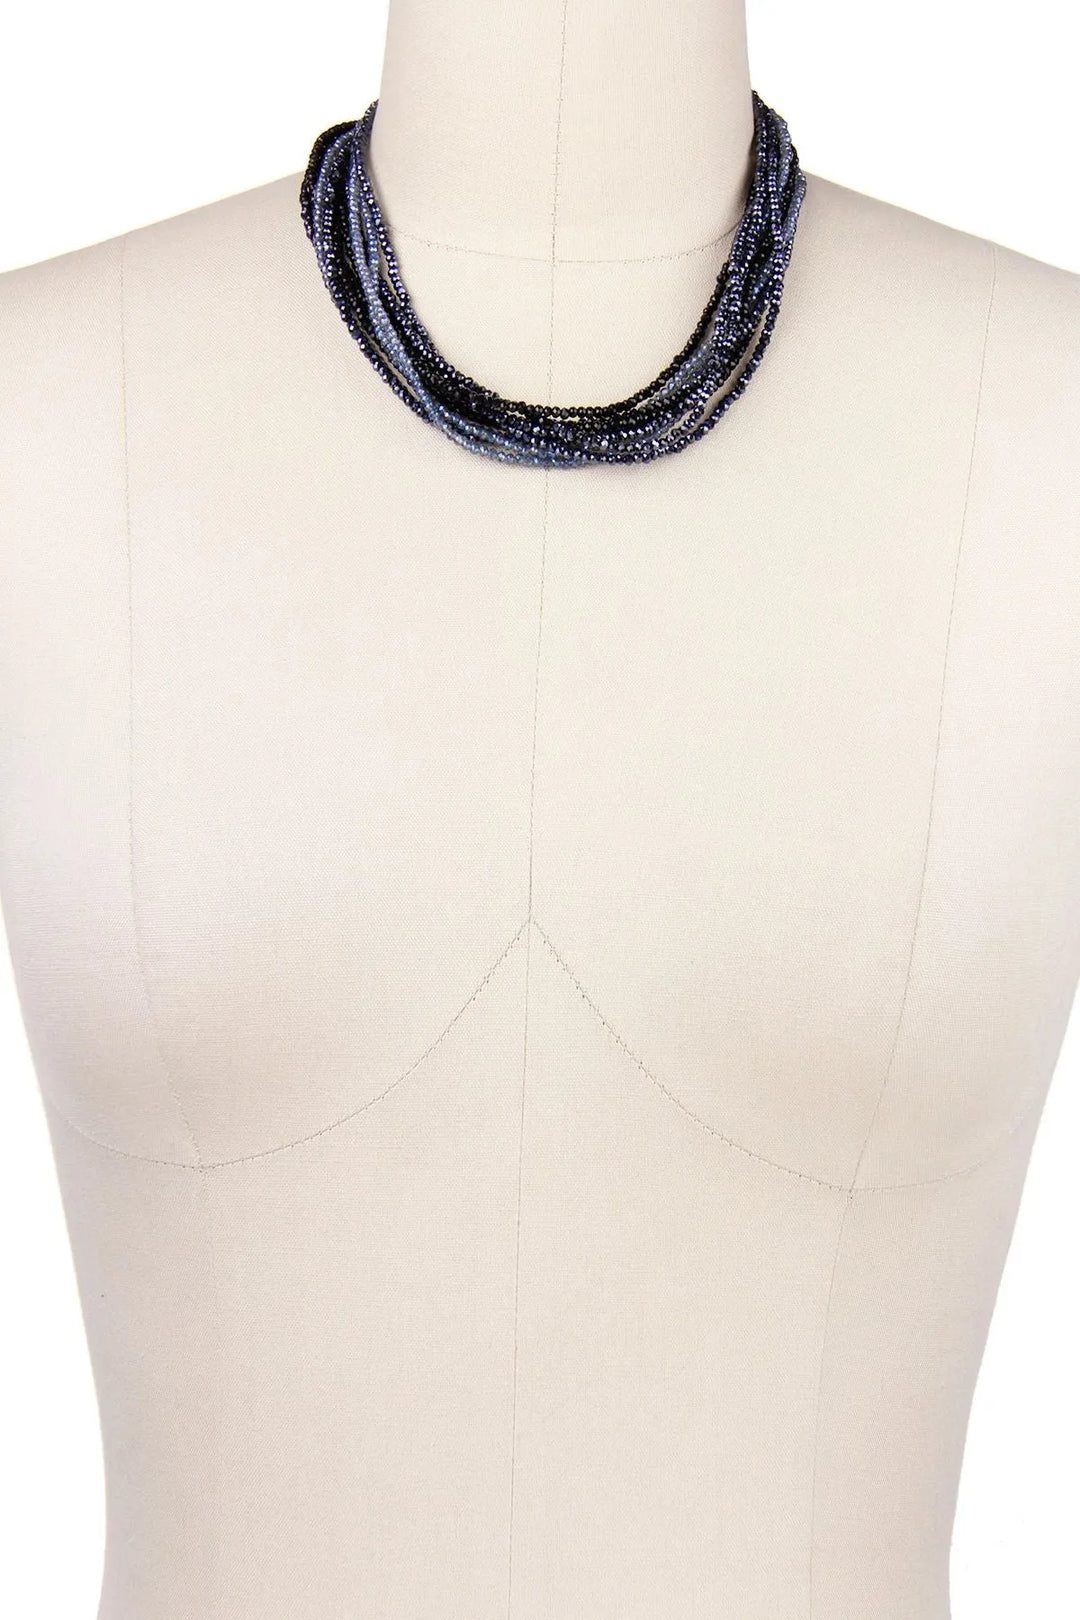 Multi Strand Crystal Ombre Necklace Black